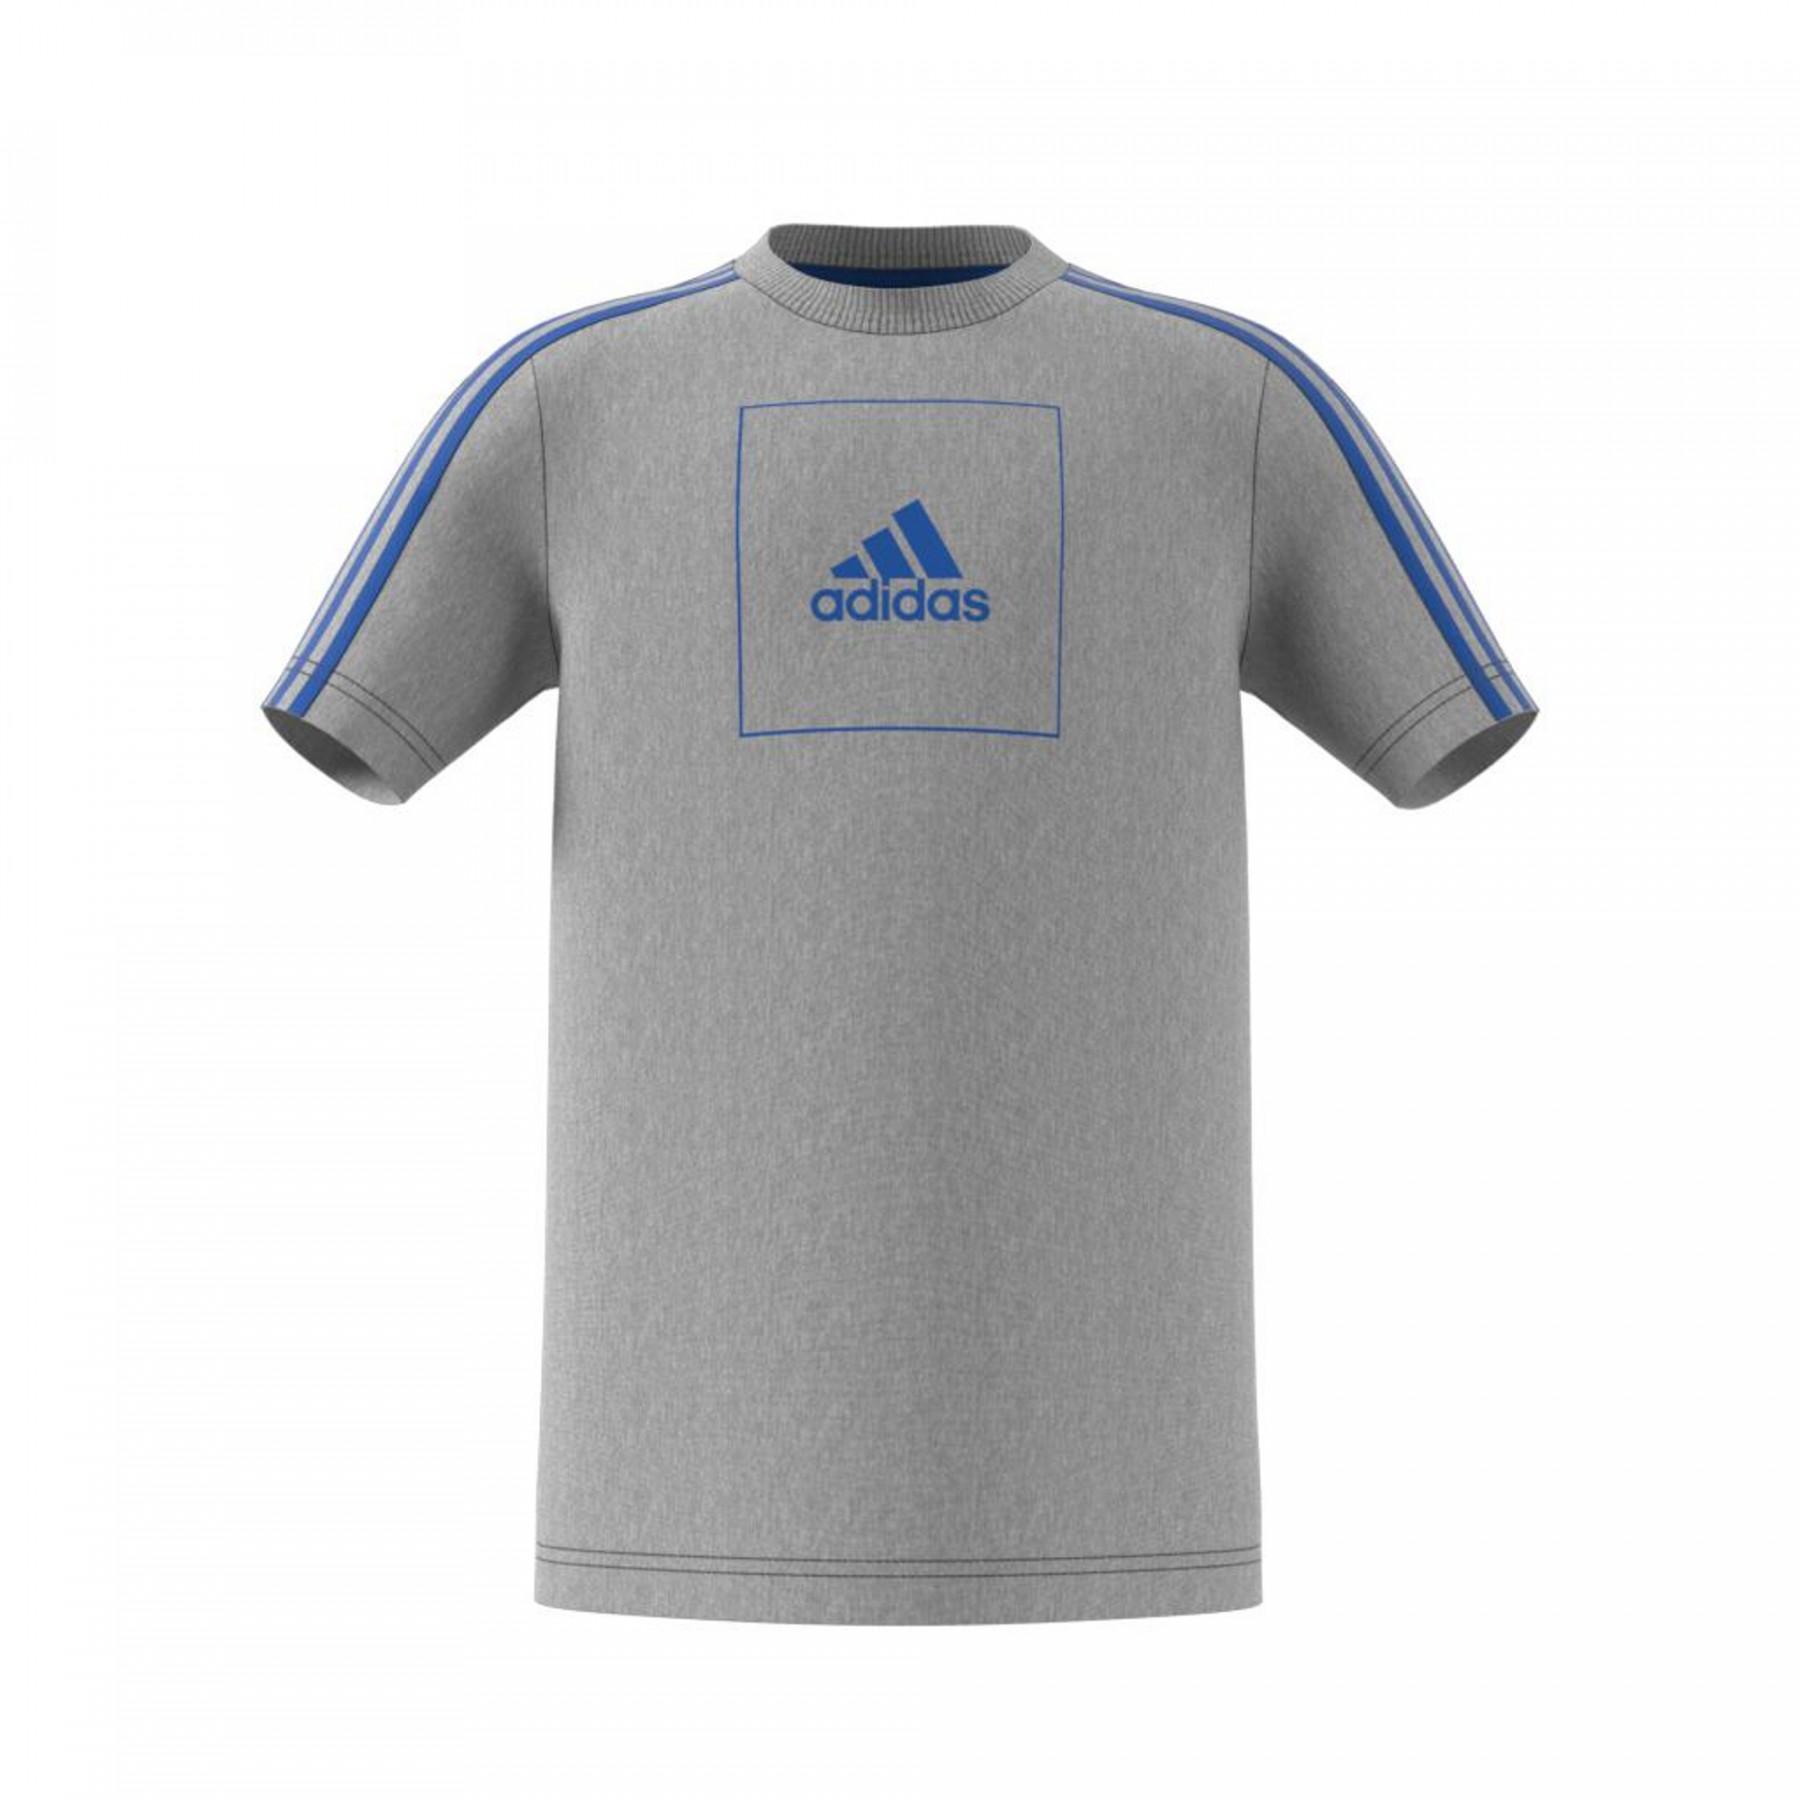 Kinder-T-shirt adidas Athletics Club